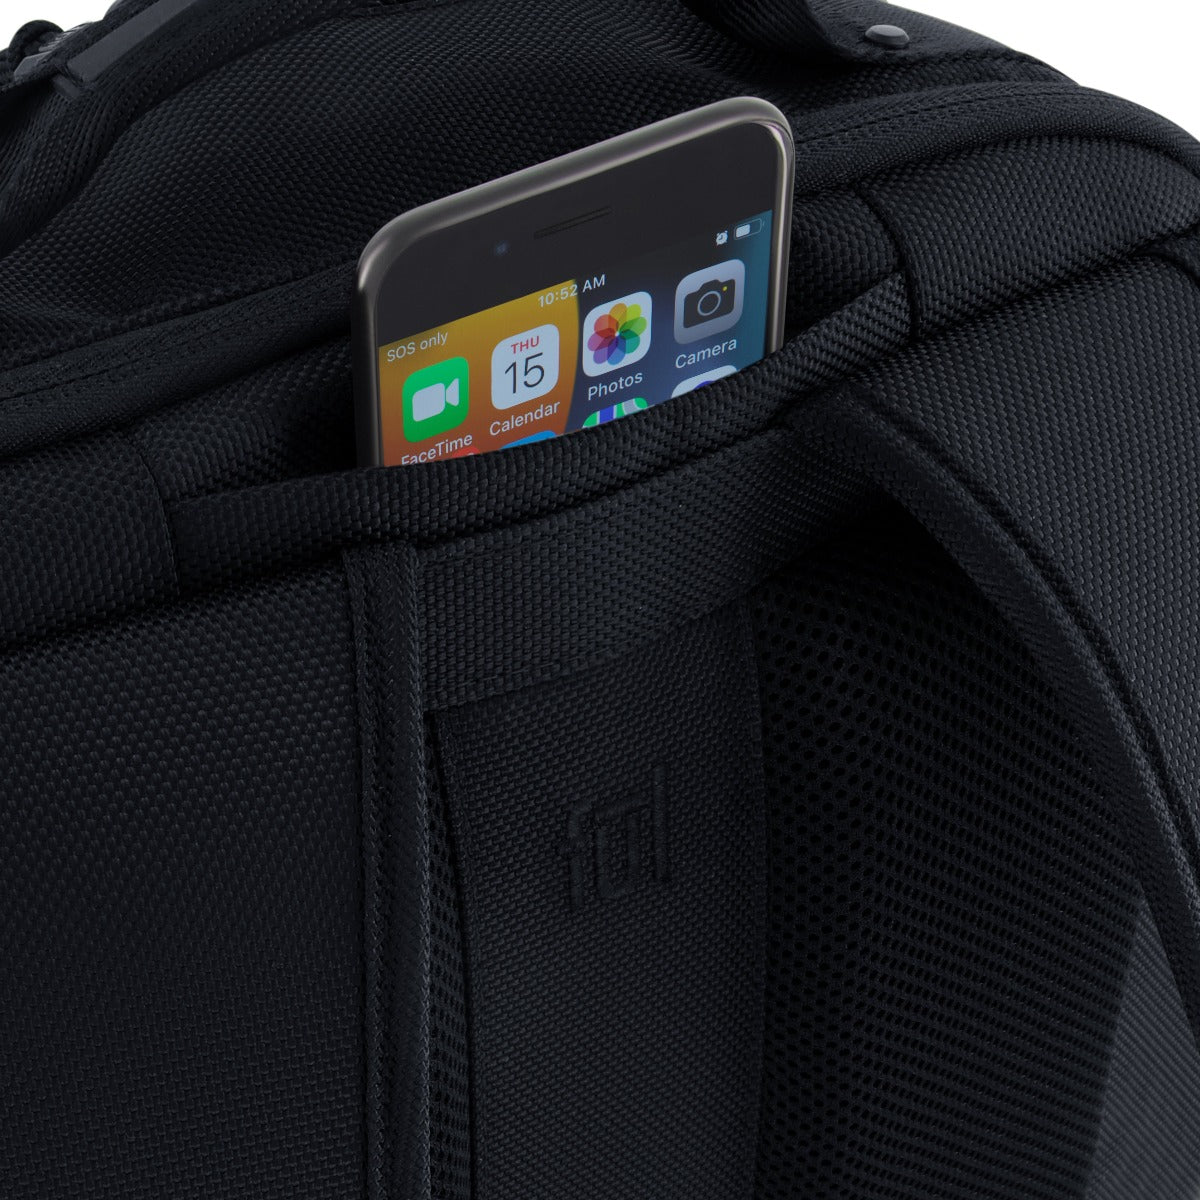 ful tactics collection division backpack black - technology safe backpacks